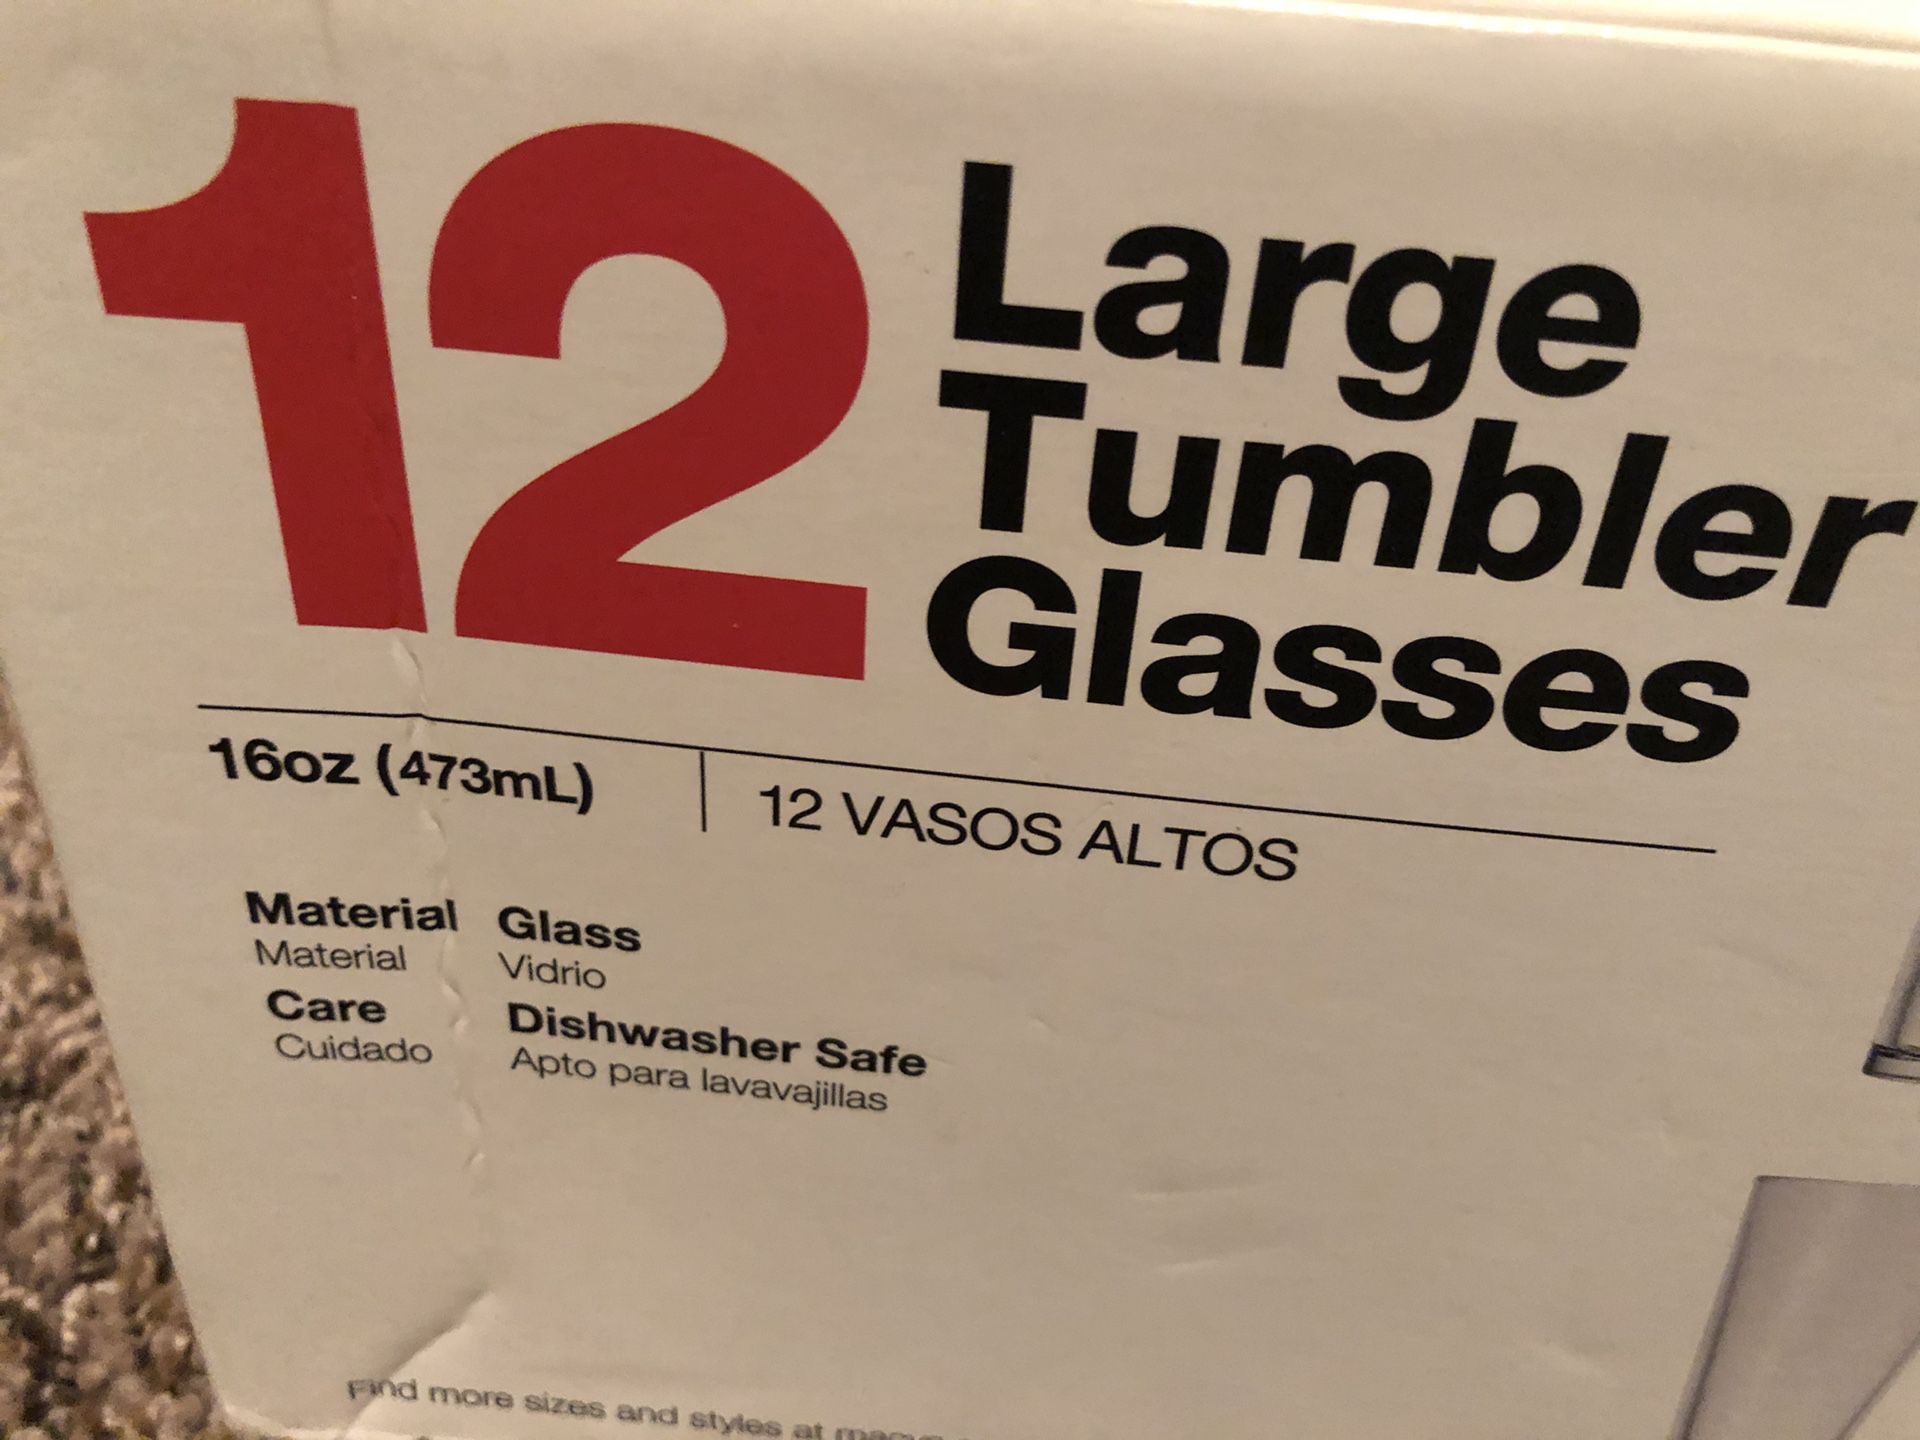 16 oz glass tumbler set. Brand new.